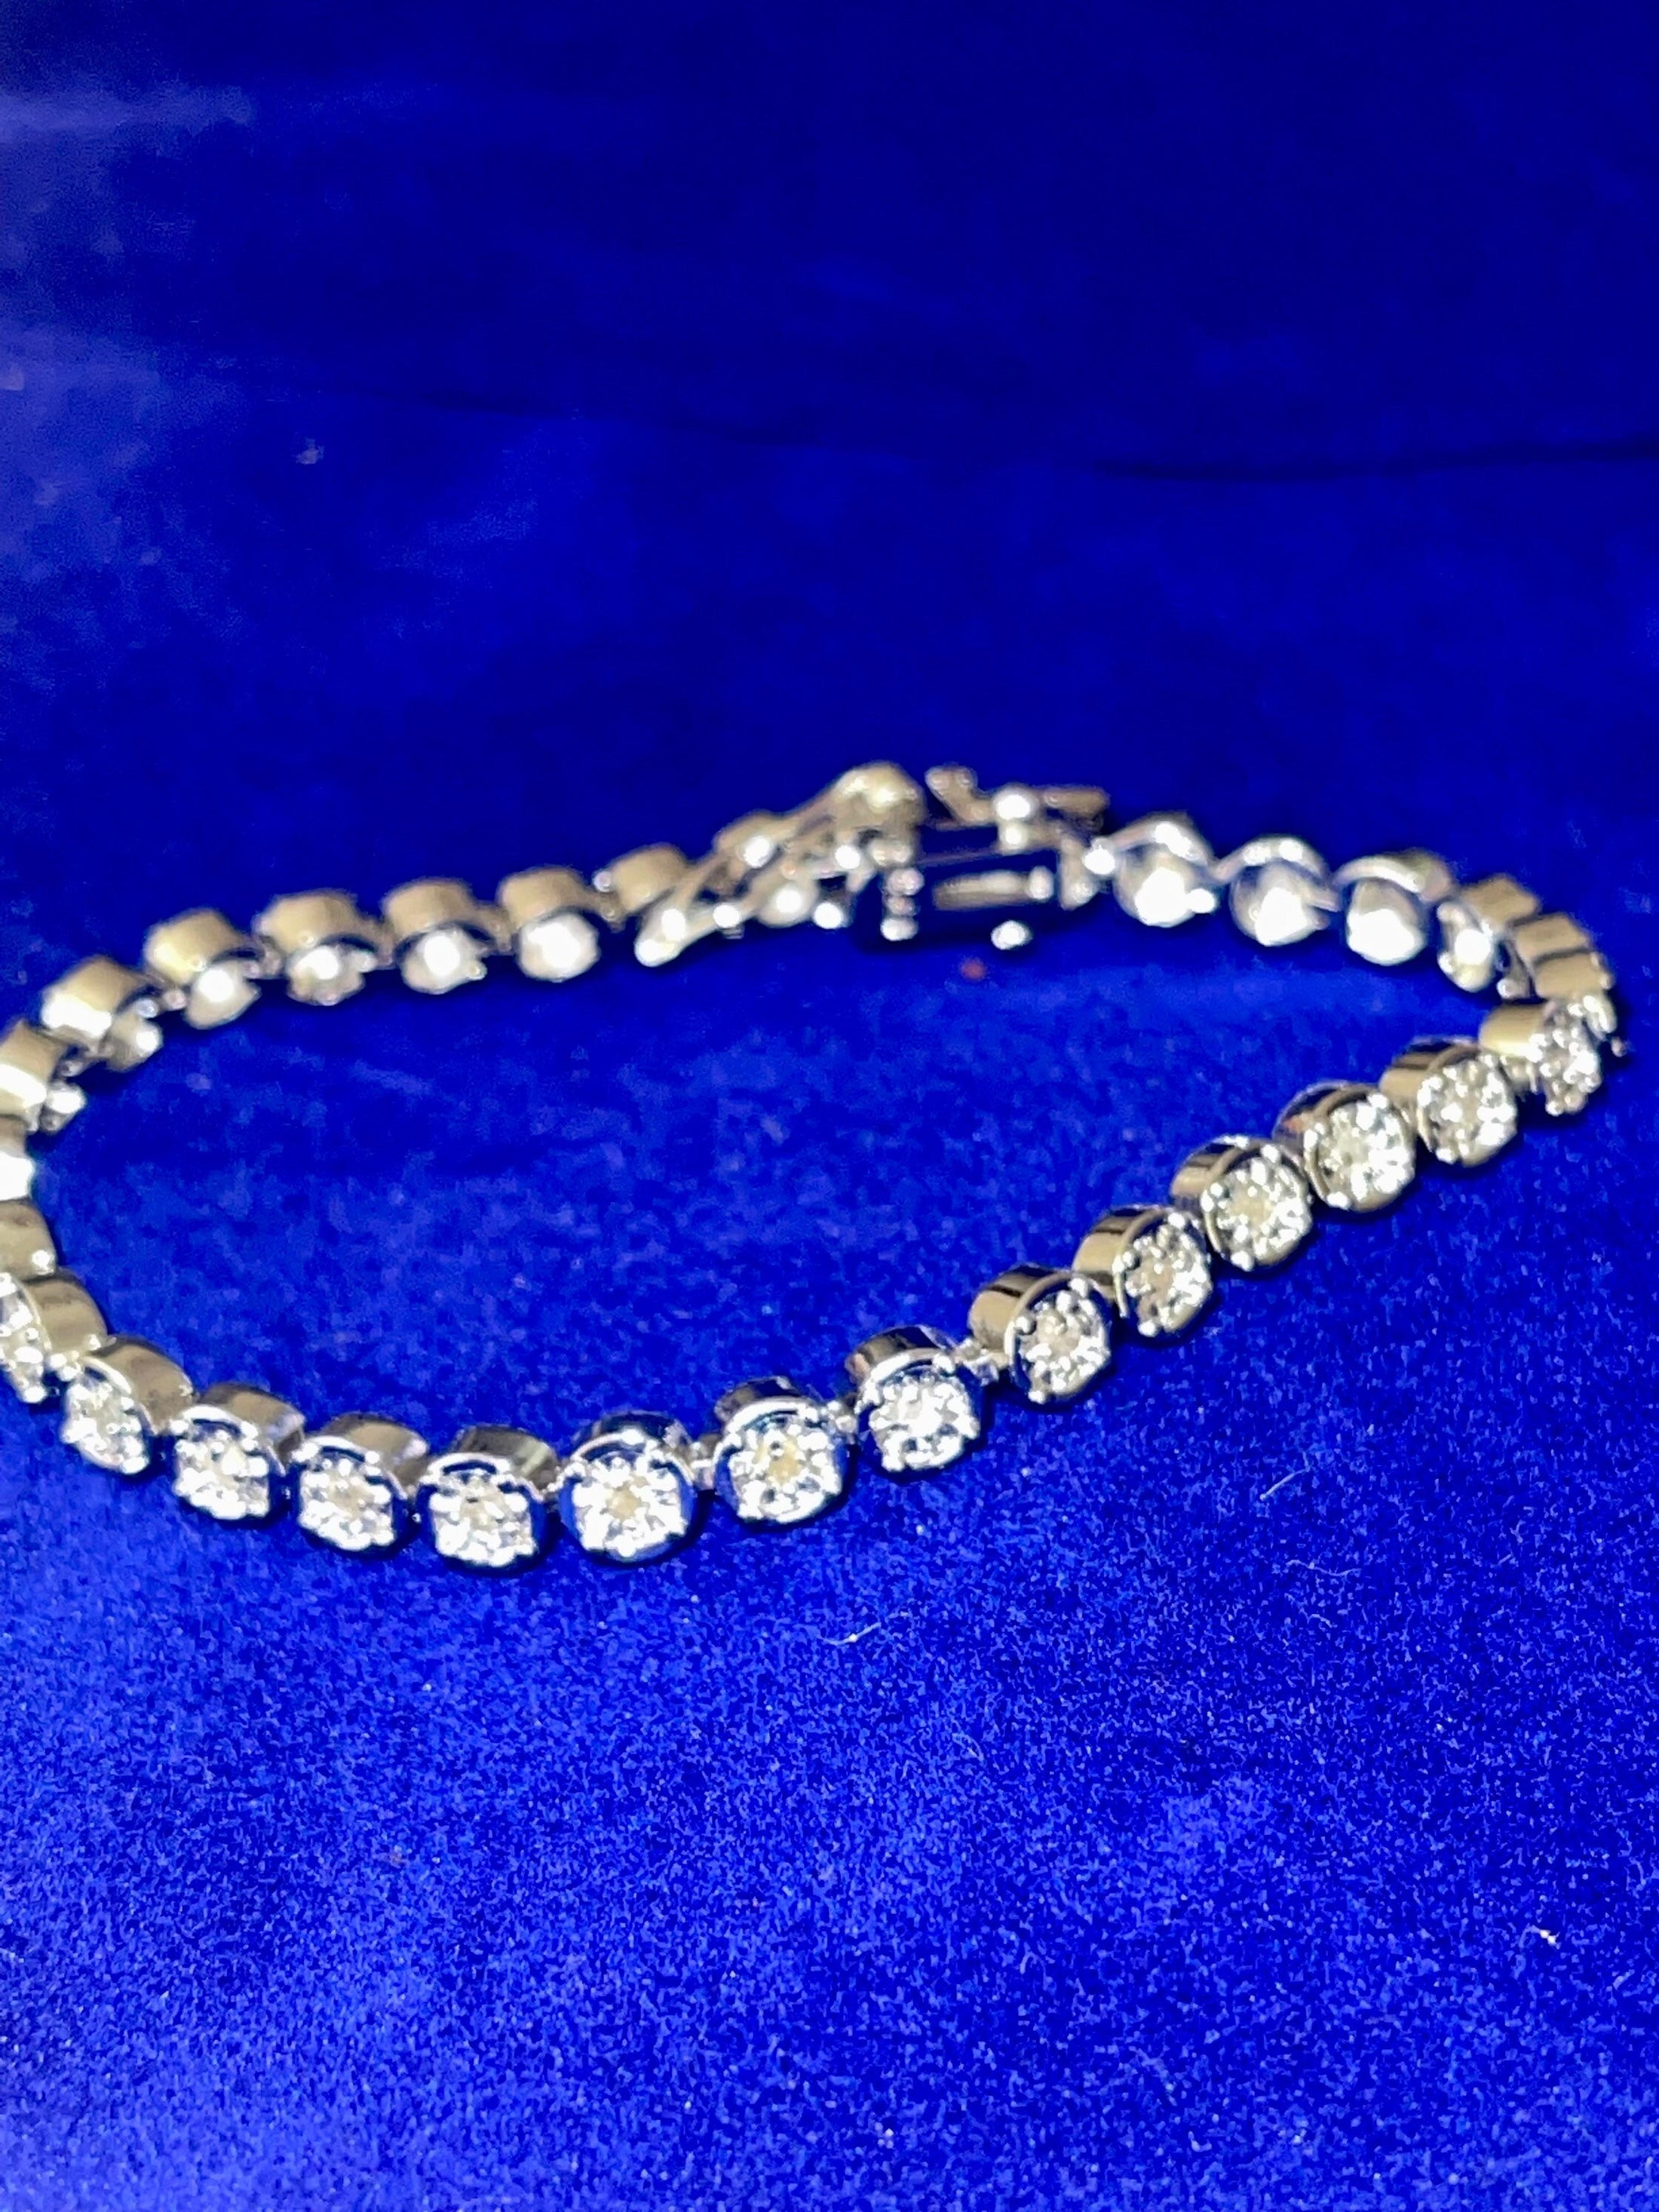 Genuine Real diamond 1 carat bracelet, natural diamond tennis bracelet for him/her birthday gift, engagement anniversary, FREE Diamond Hoops